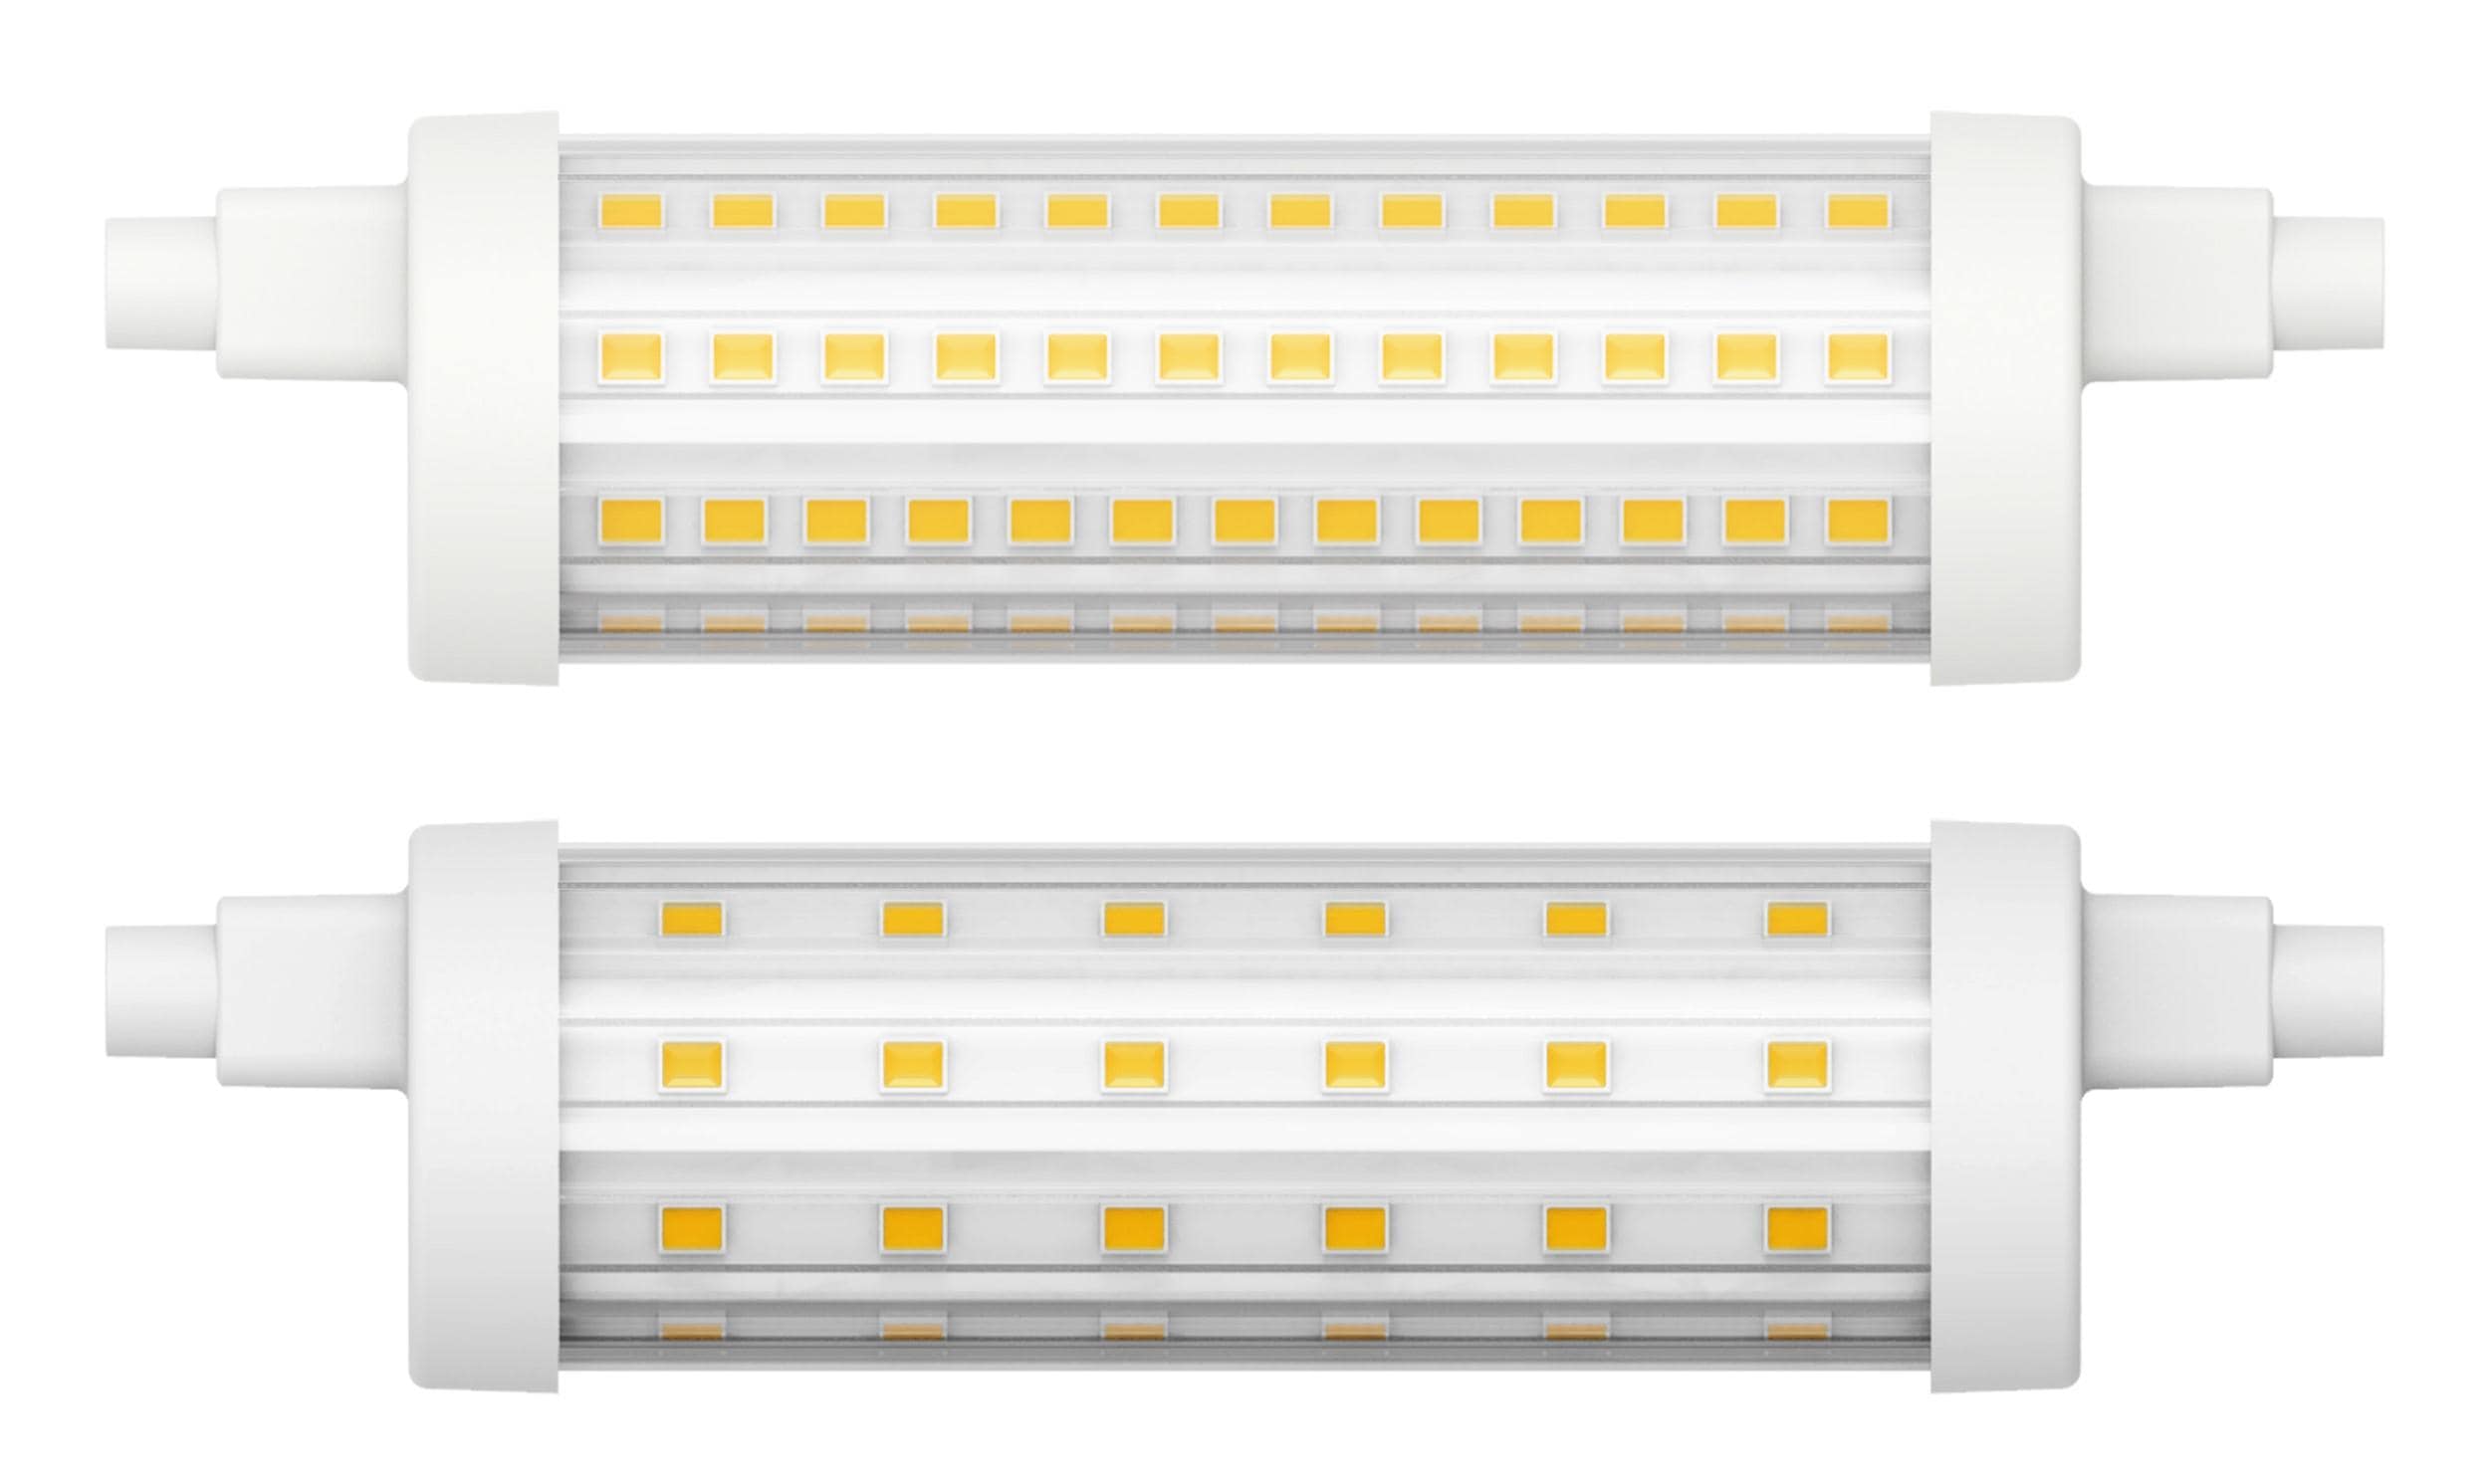 Müller Licht LED R7s Lampen - verschiedene Ausführungen